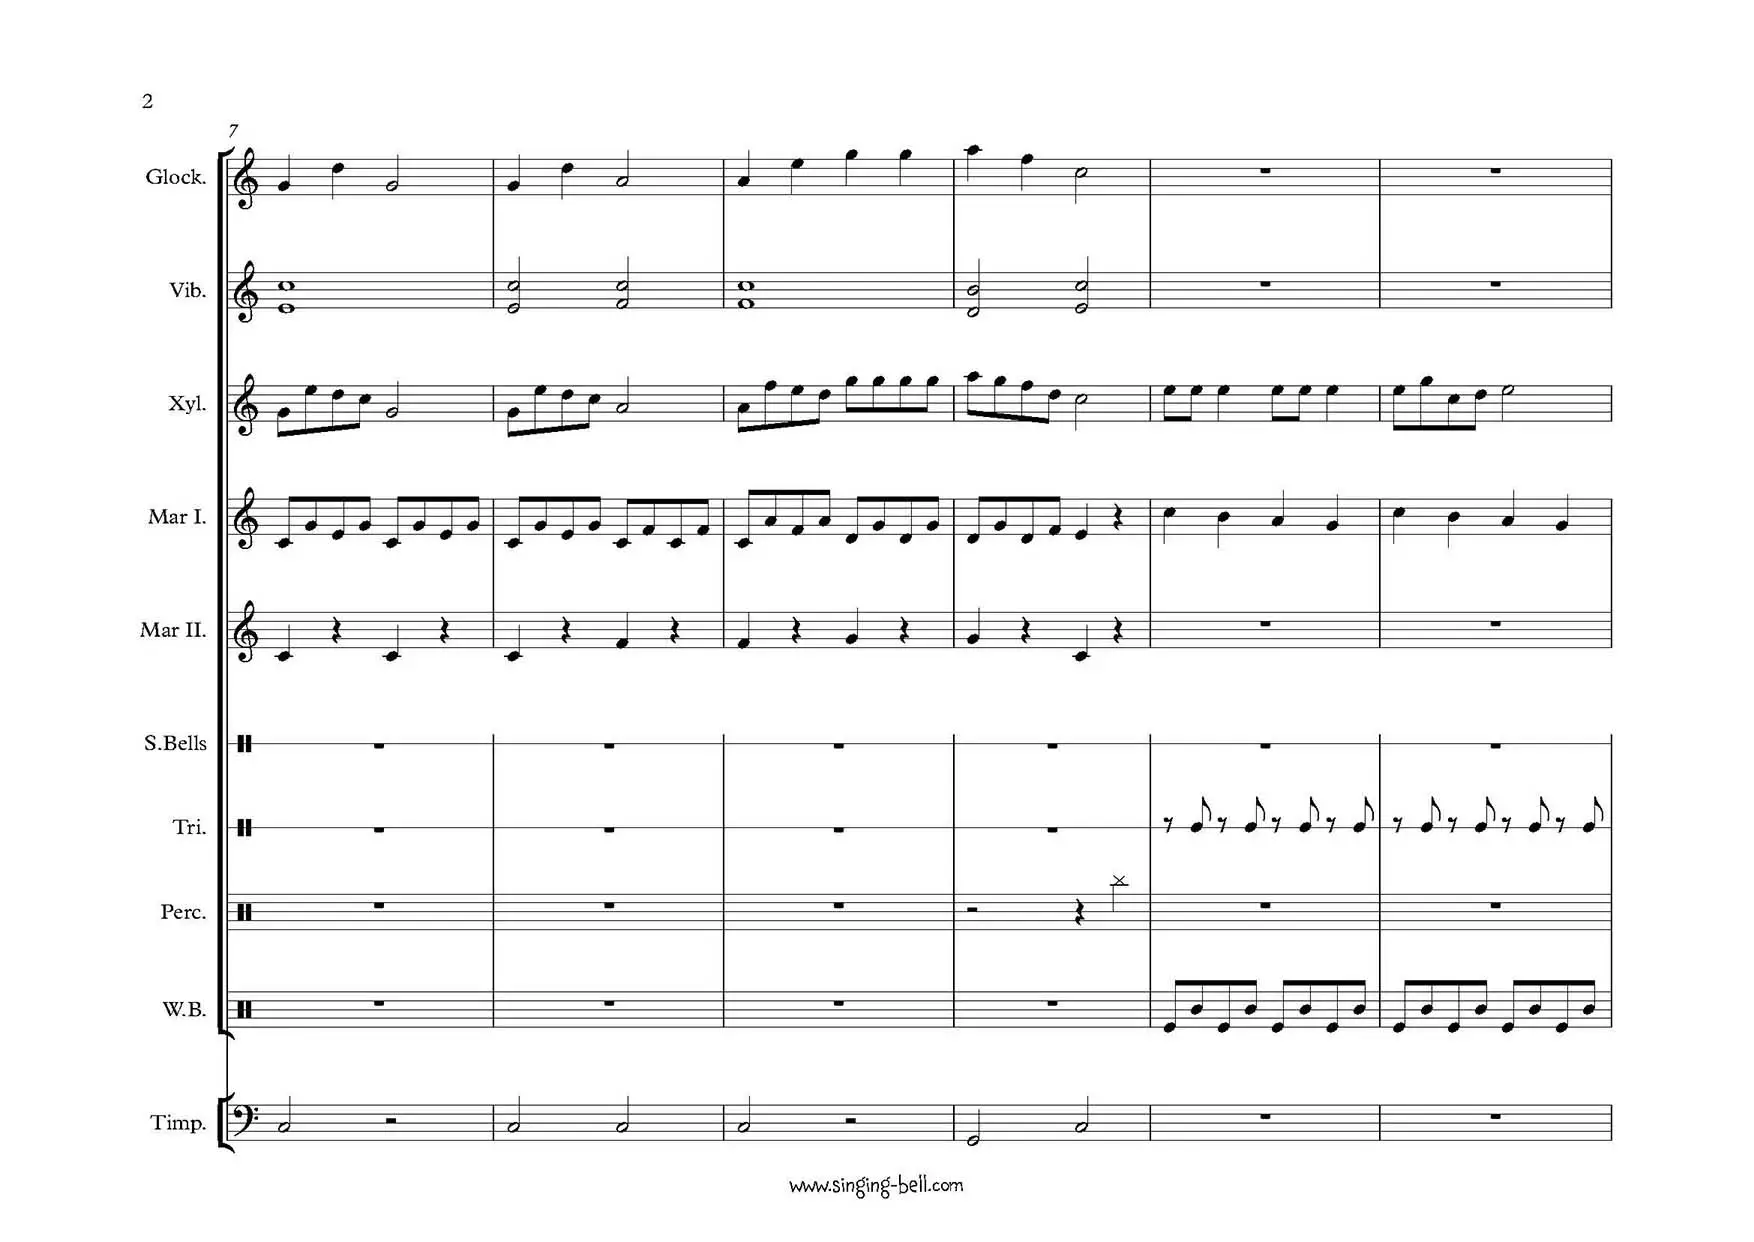 Jingle Bells mallets percussion ensemble orff arrangement sheet music page 2